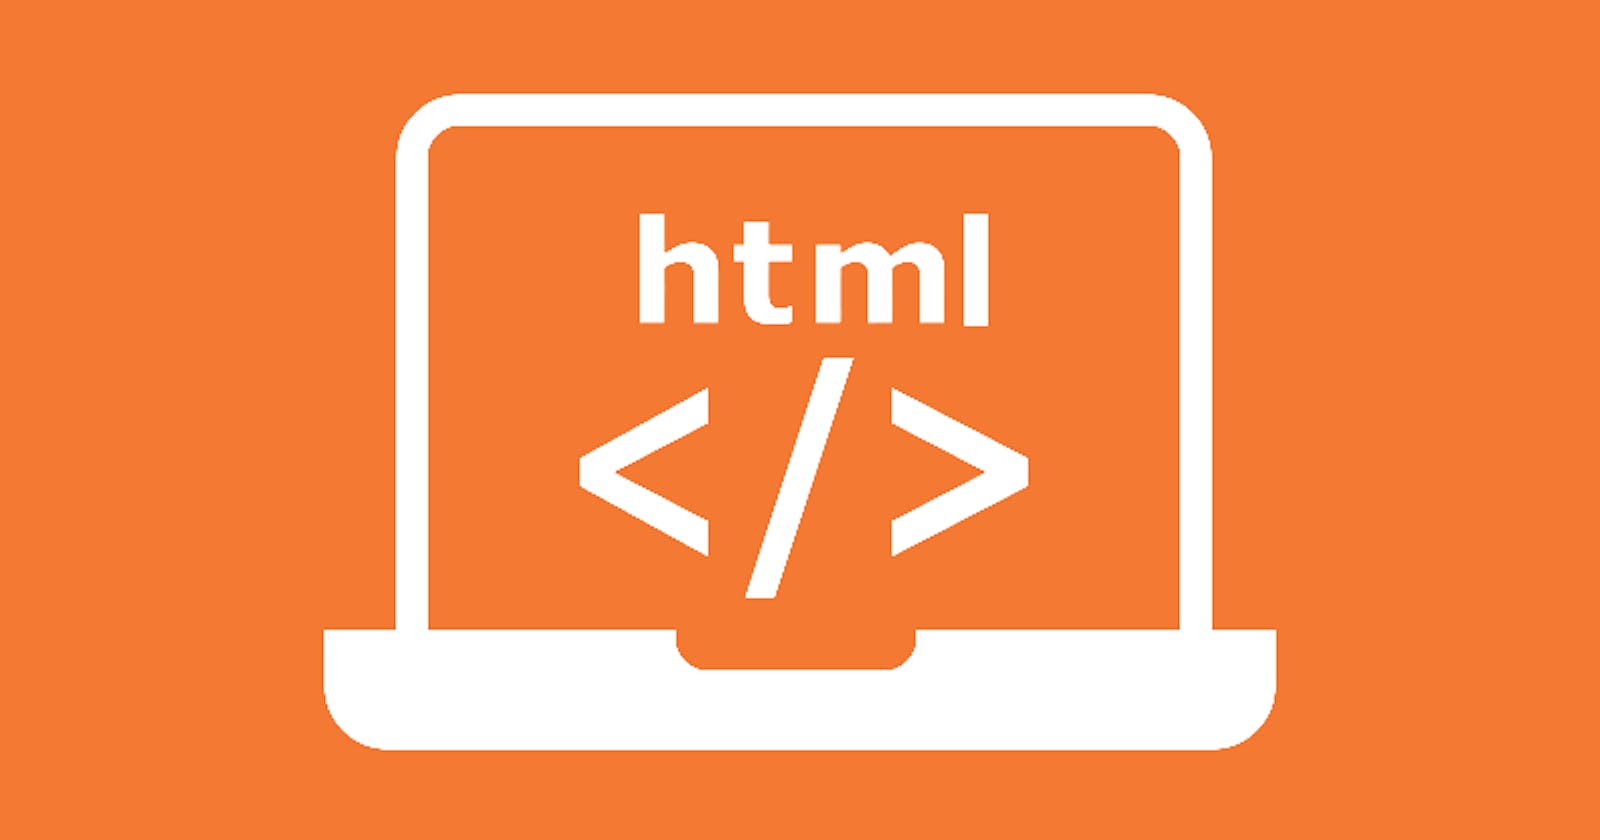 HTML - I give shape to the page!!!